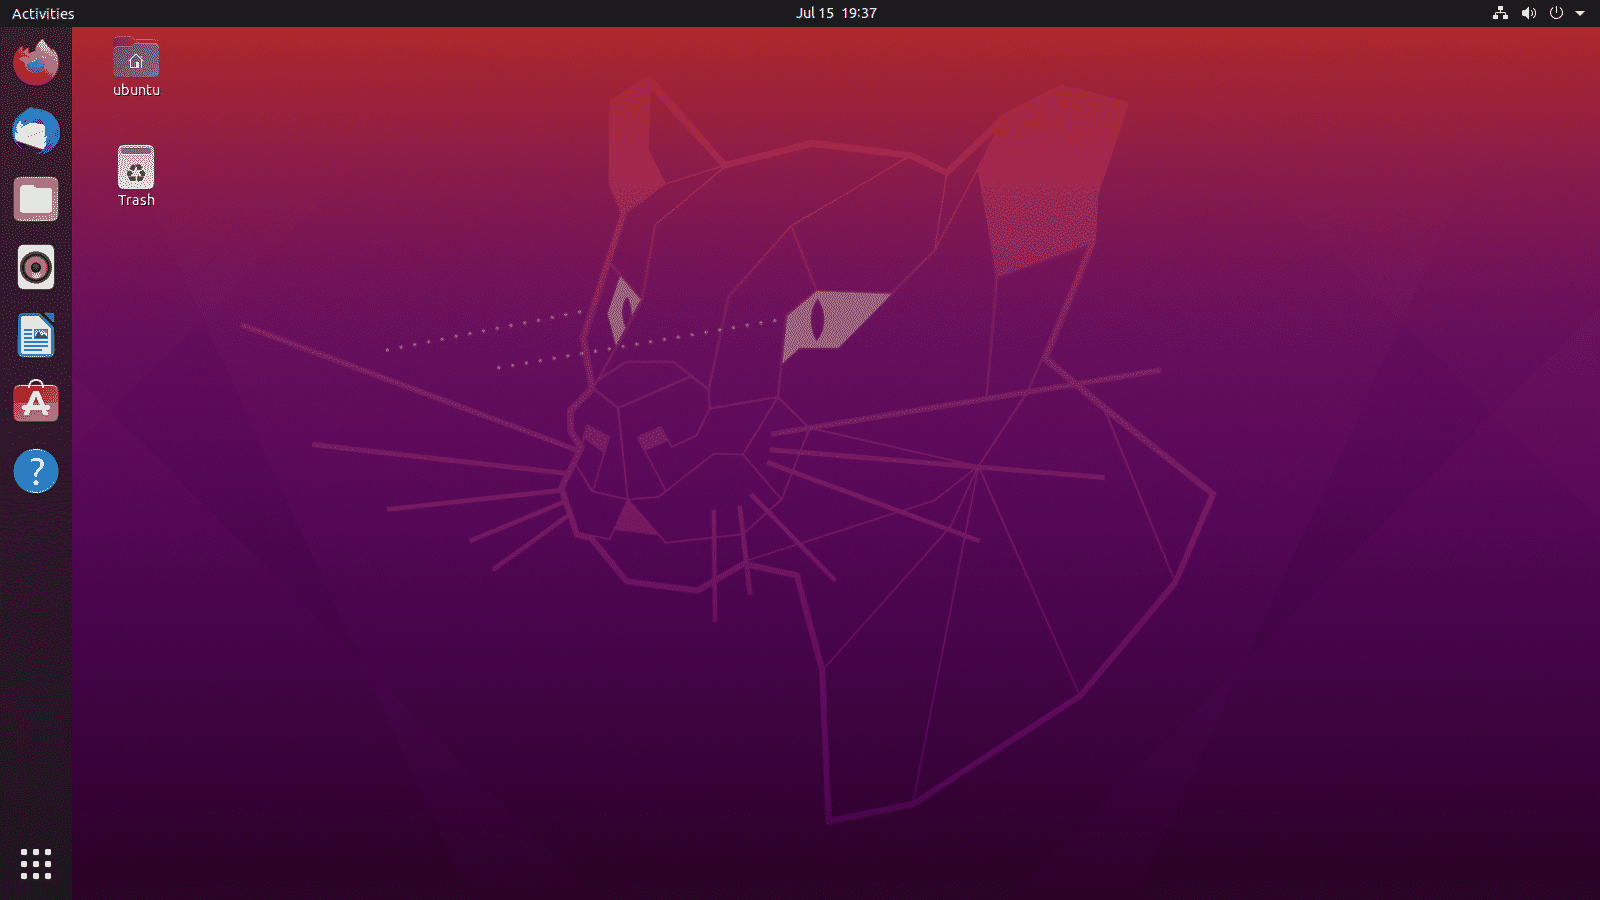 Interface Ubuntu